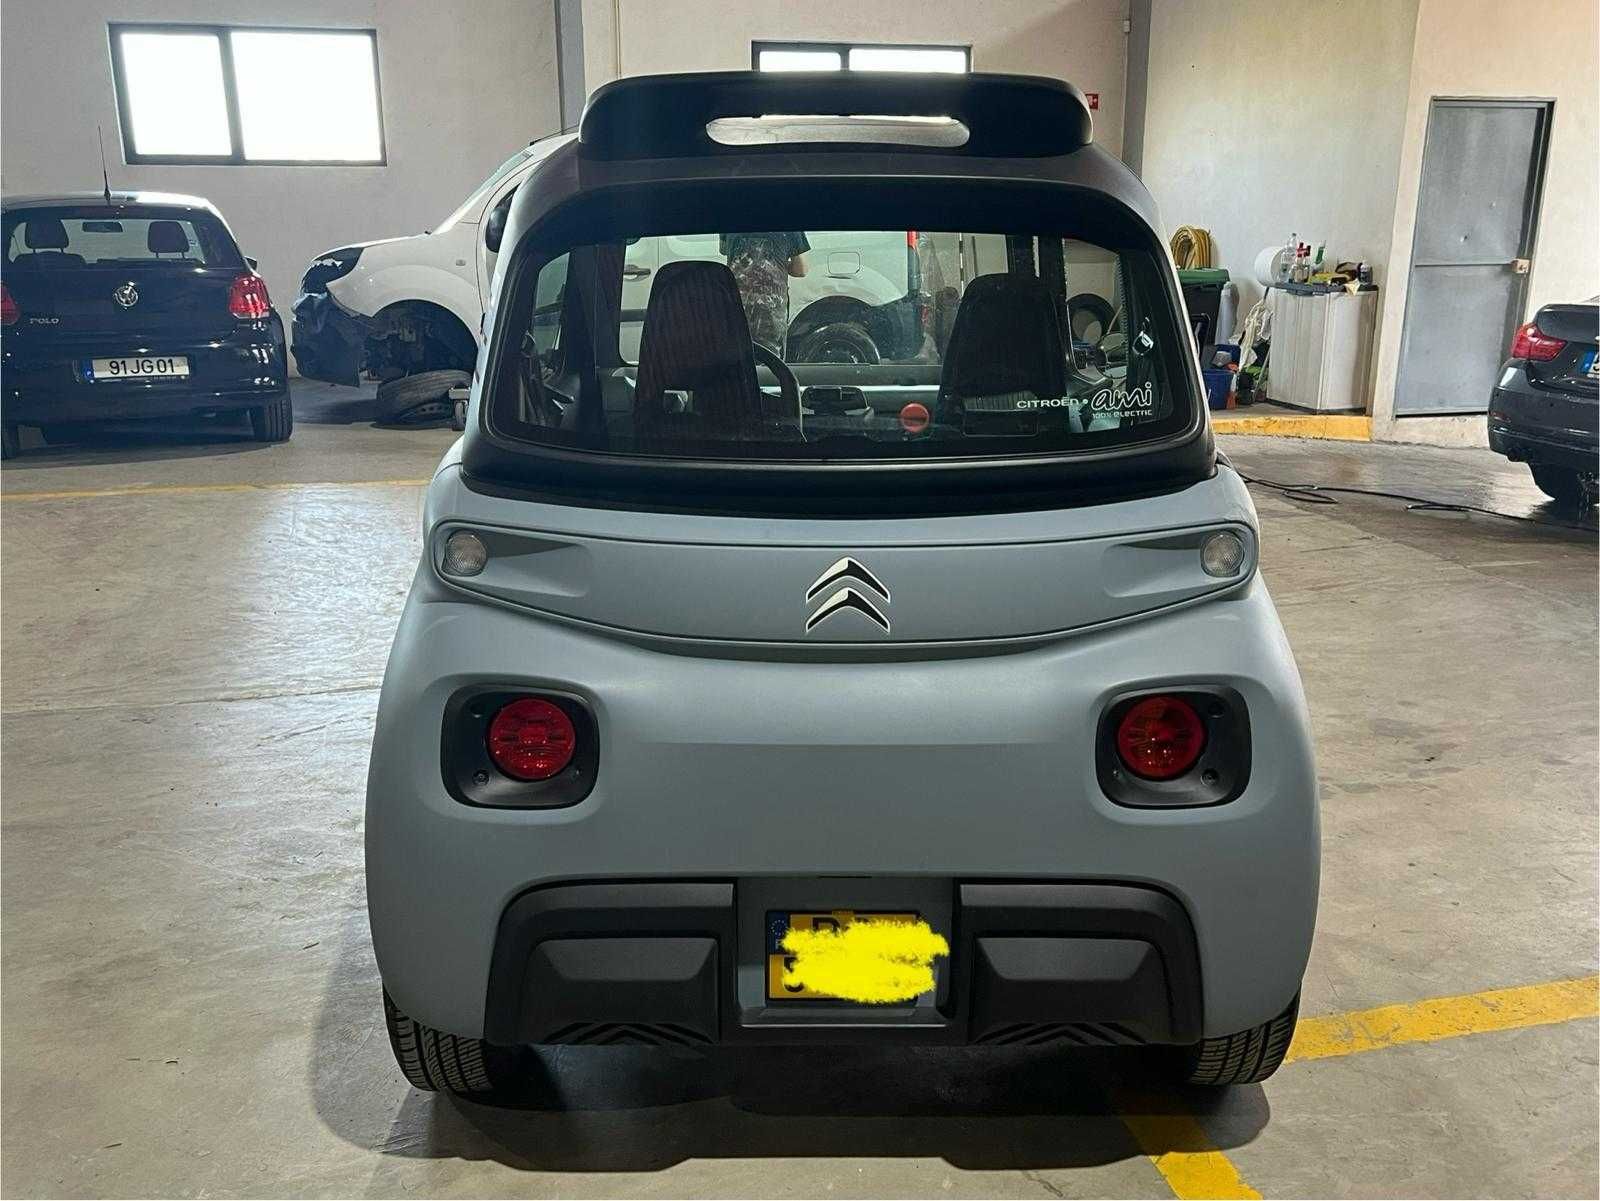 Citroën Ami Standard